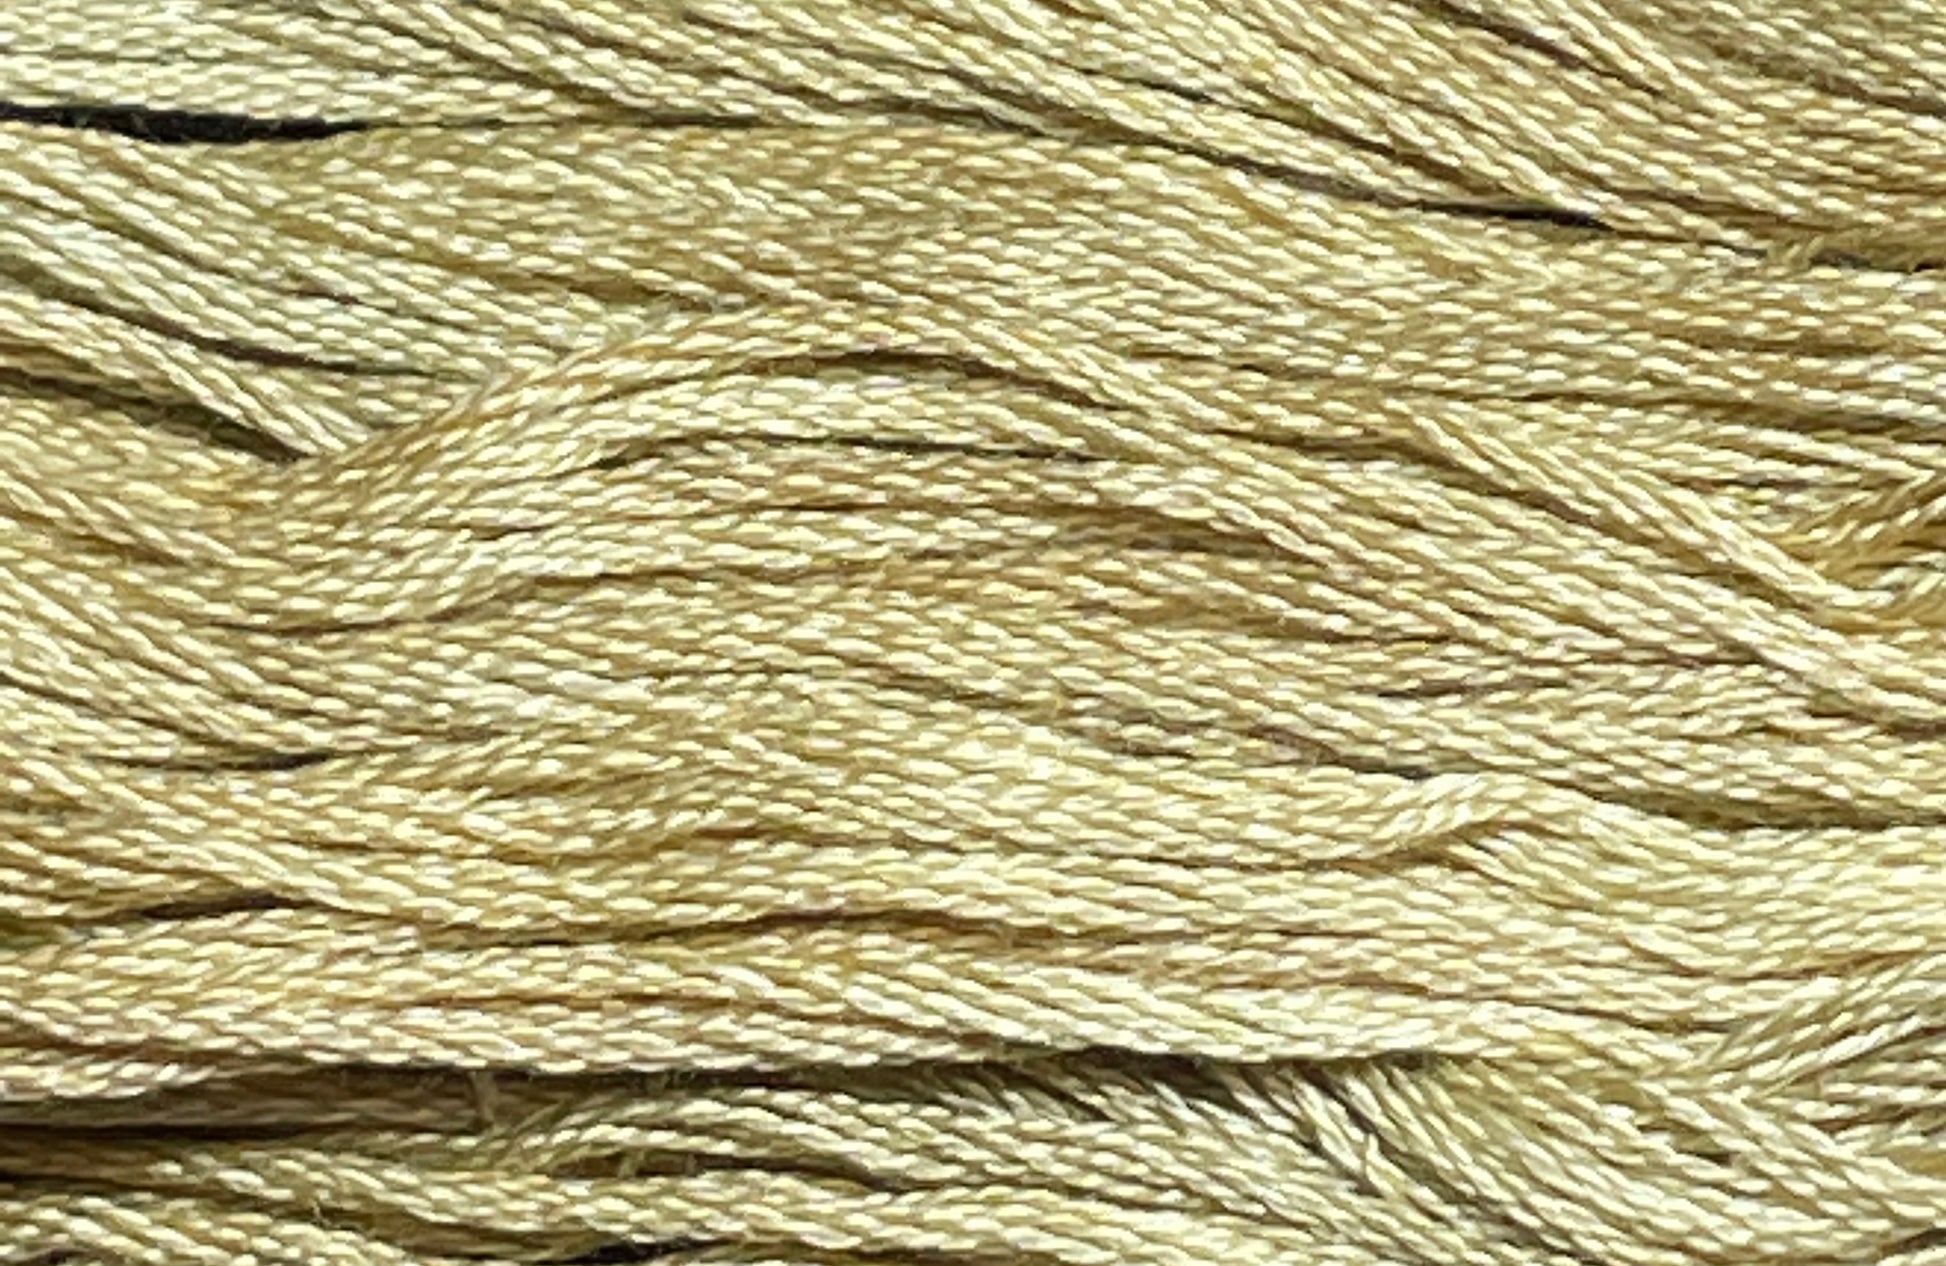 Carmel Corn - Gentle Arts Cotton Thread - 5 yard Skein - Cross Stitch Floss, Thread & Floss, Thread & Floss, The Crafty Grimalkin - A Cross Stitch Store